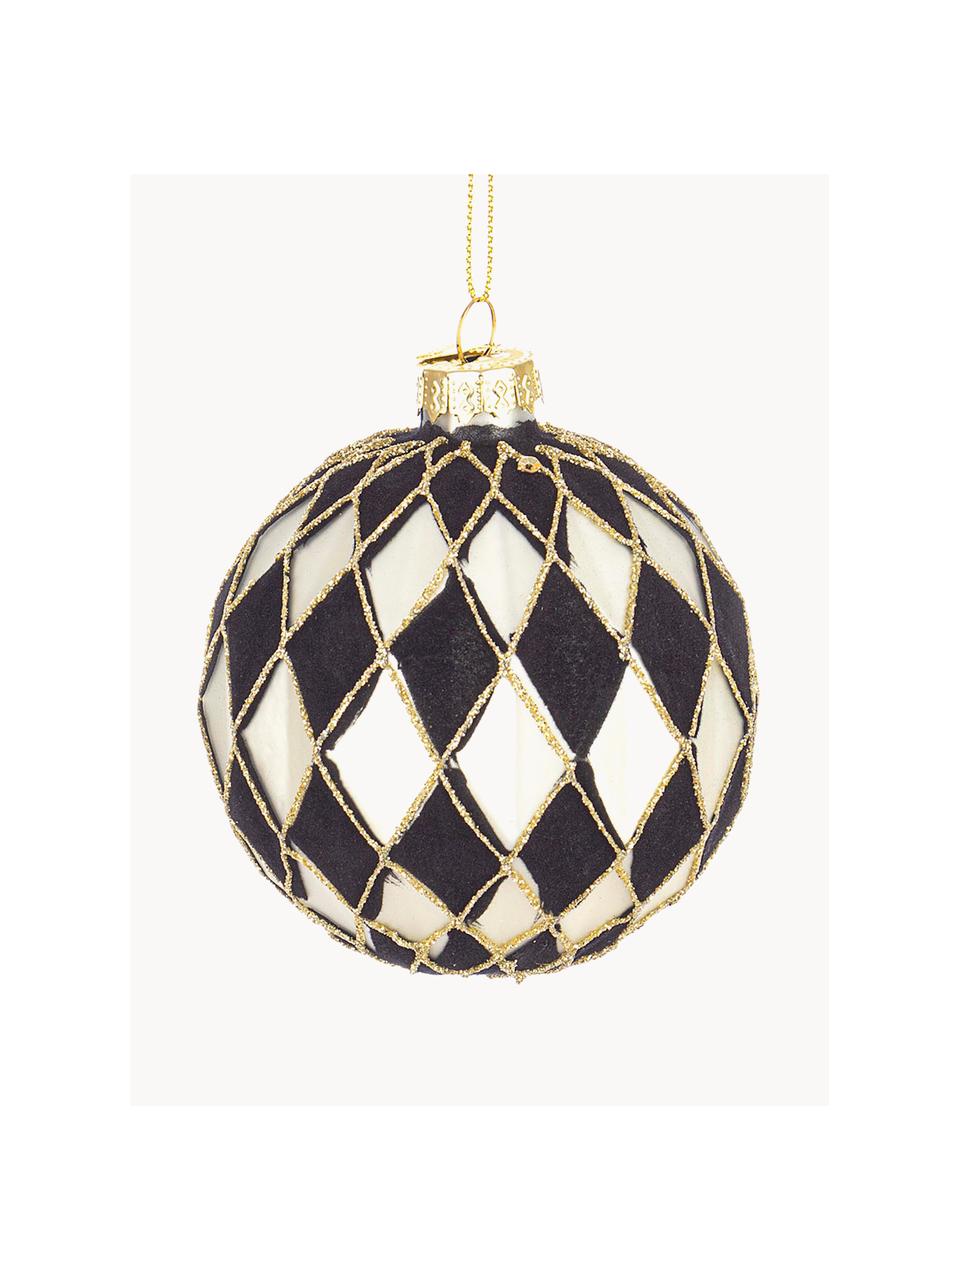 Kerstballen Monochrome, 12 stuks, Glas, Wit, zwart, goudkleurig, Ø 8 cm